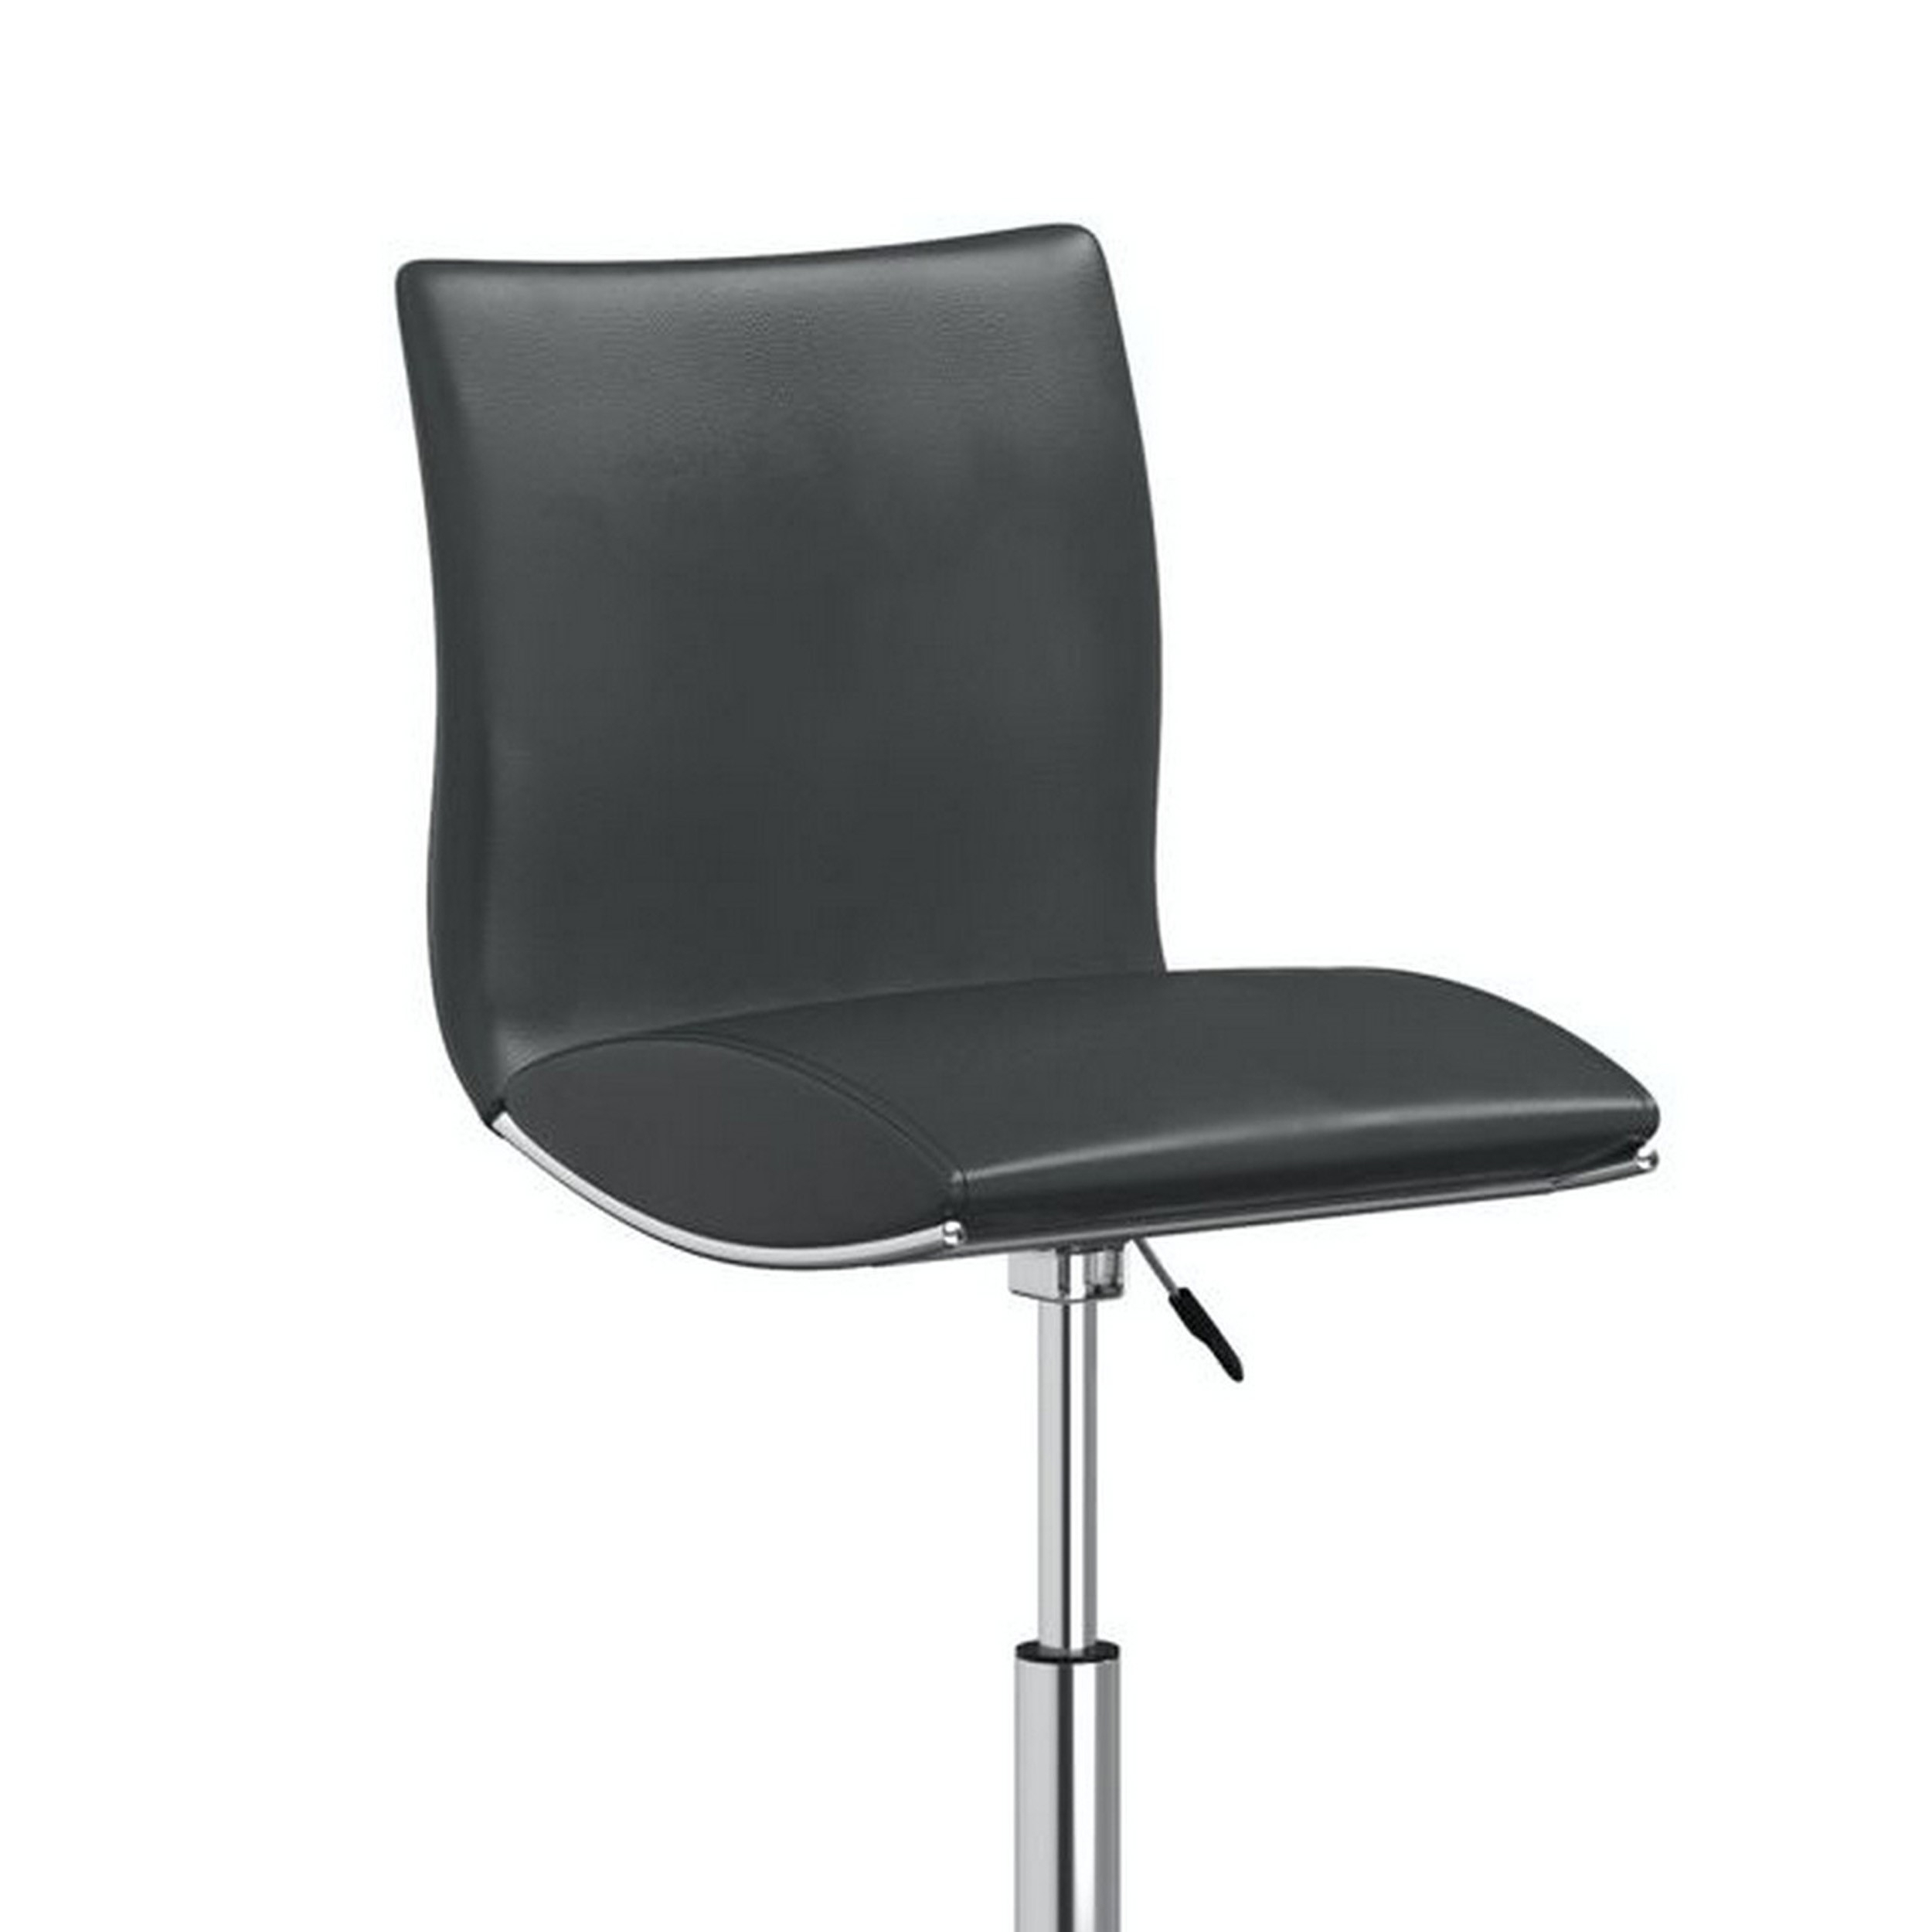 Deko 26-31 Inch Adjustable Height Barstool Chair, Set Of 2, Chrome, Gray Faux Leather - Saltoro Sherpi